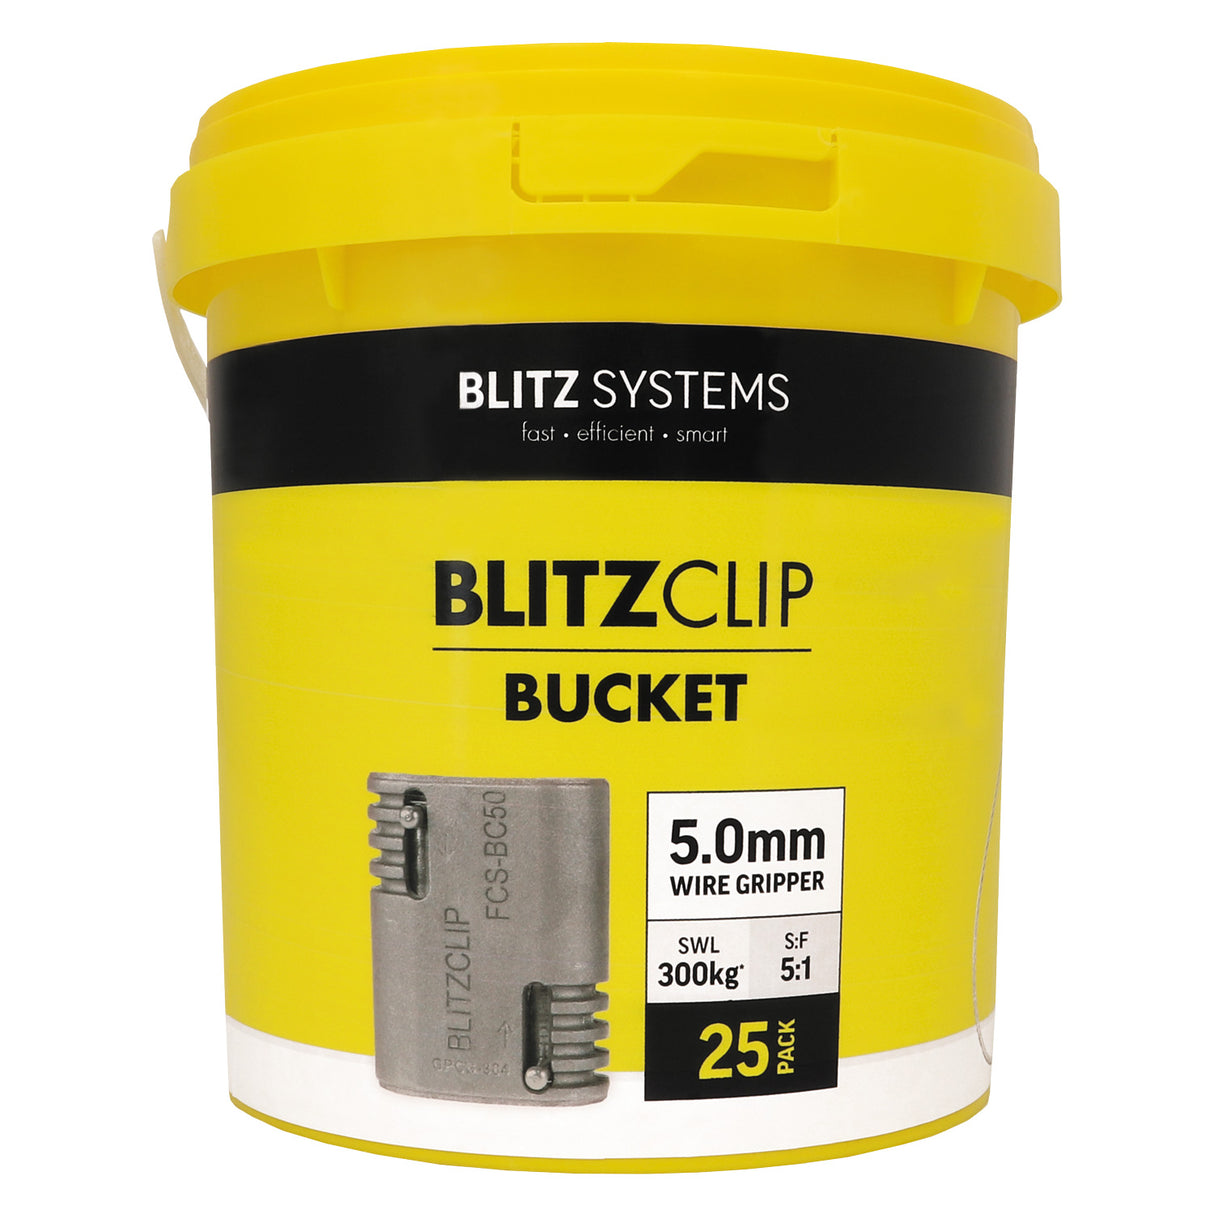 BLITZCLIP Bucket - 5.0mm Wire Gripper x 25 Pcs (4.0-5.0mm)